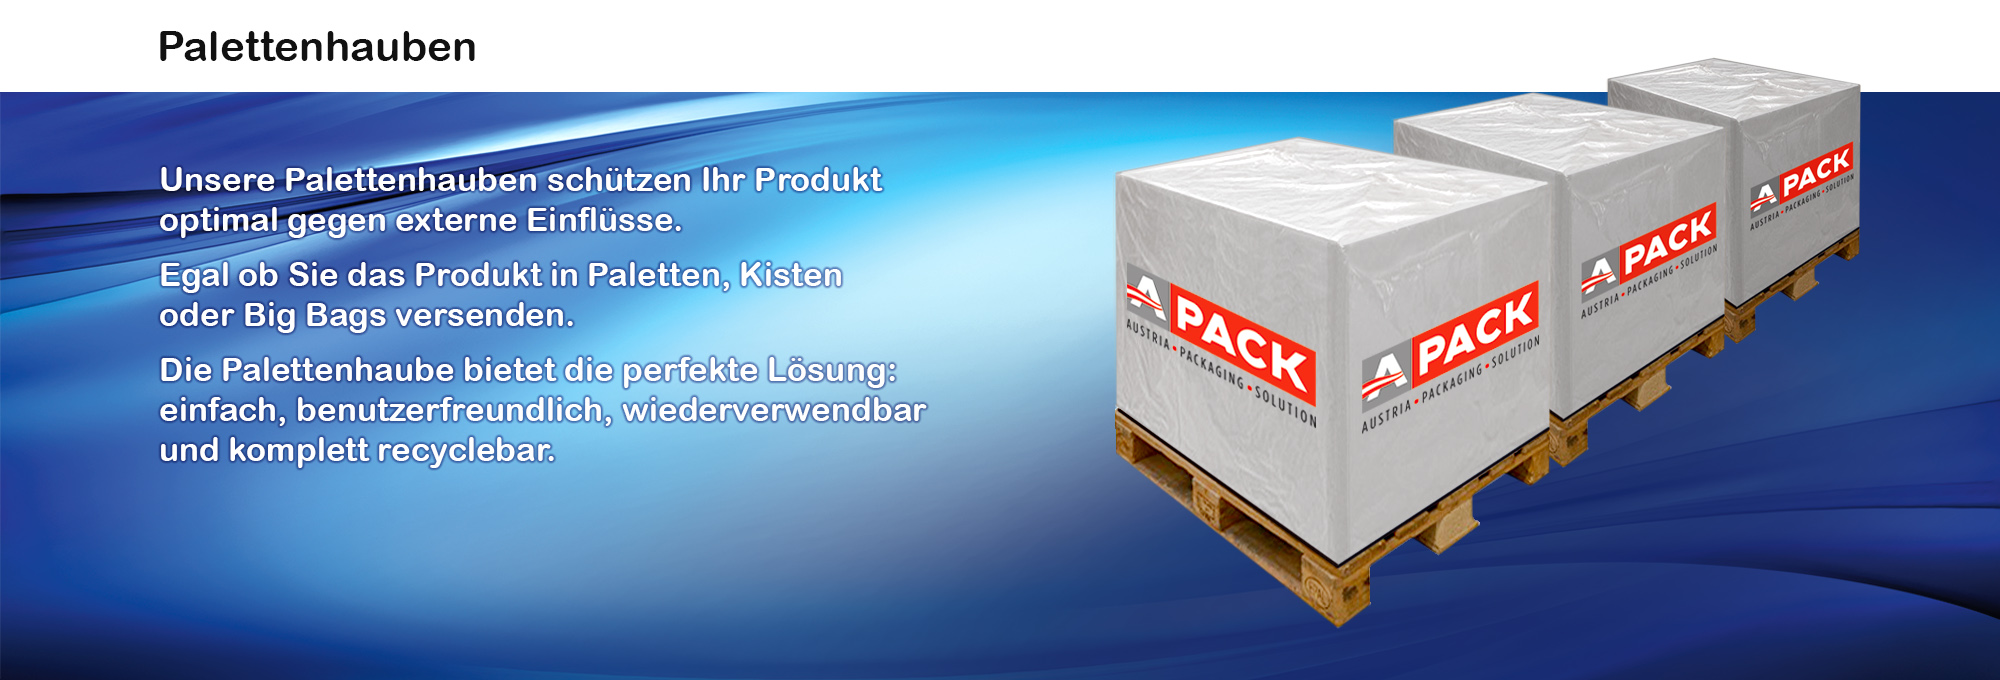 Austria Packaging Solution Industrie Palettenhauben